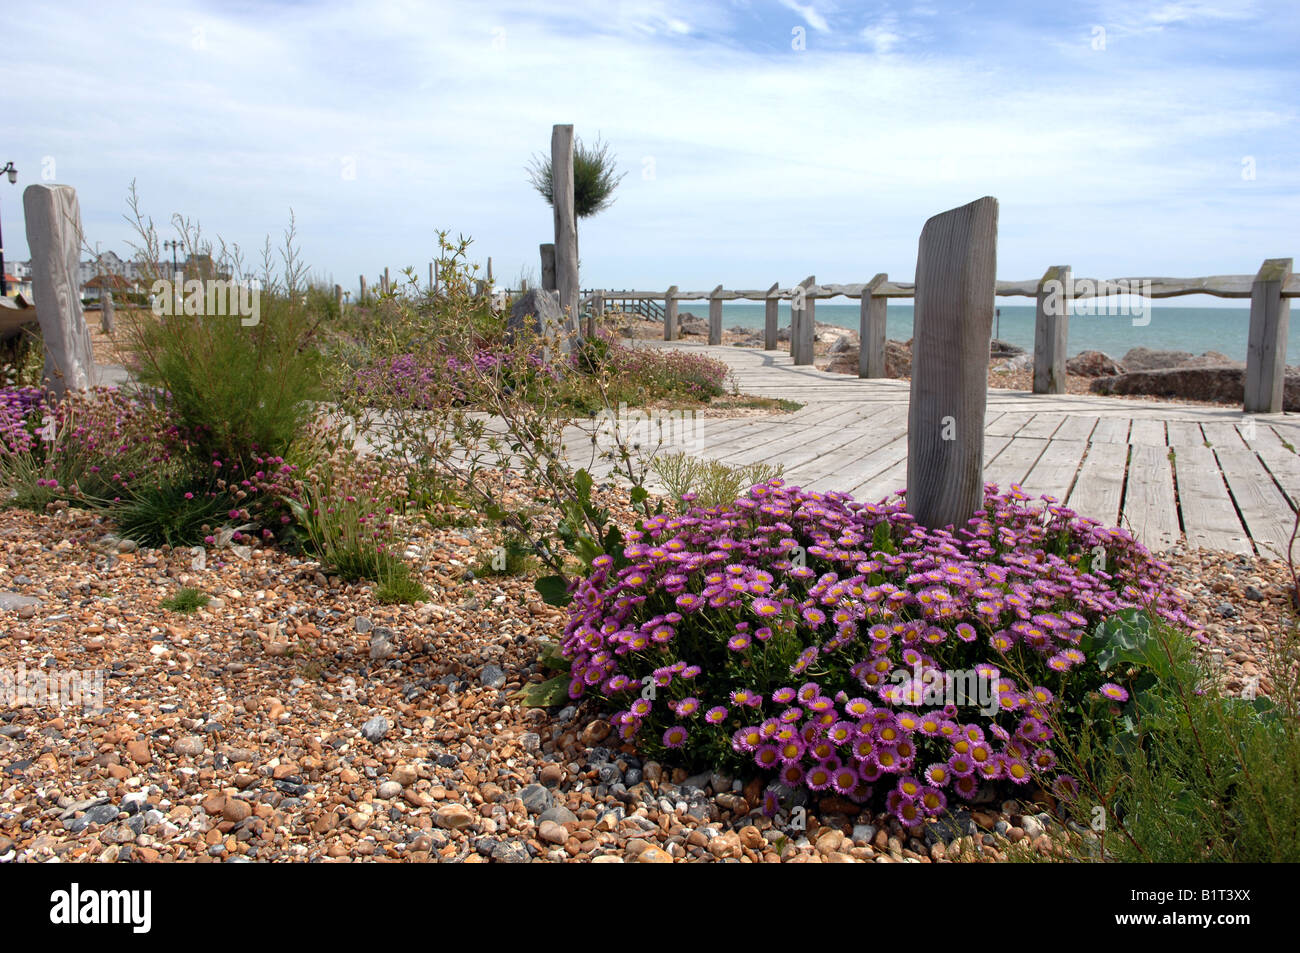 El jardín de estilo mediterráneo Waterwise en Worthing Beach UK Foto de stock